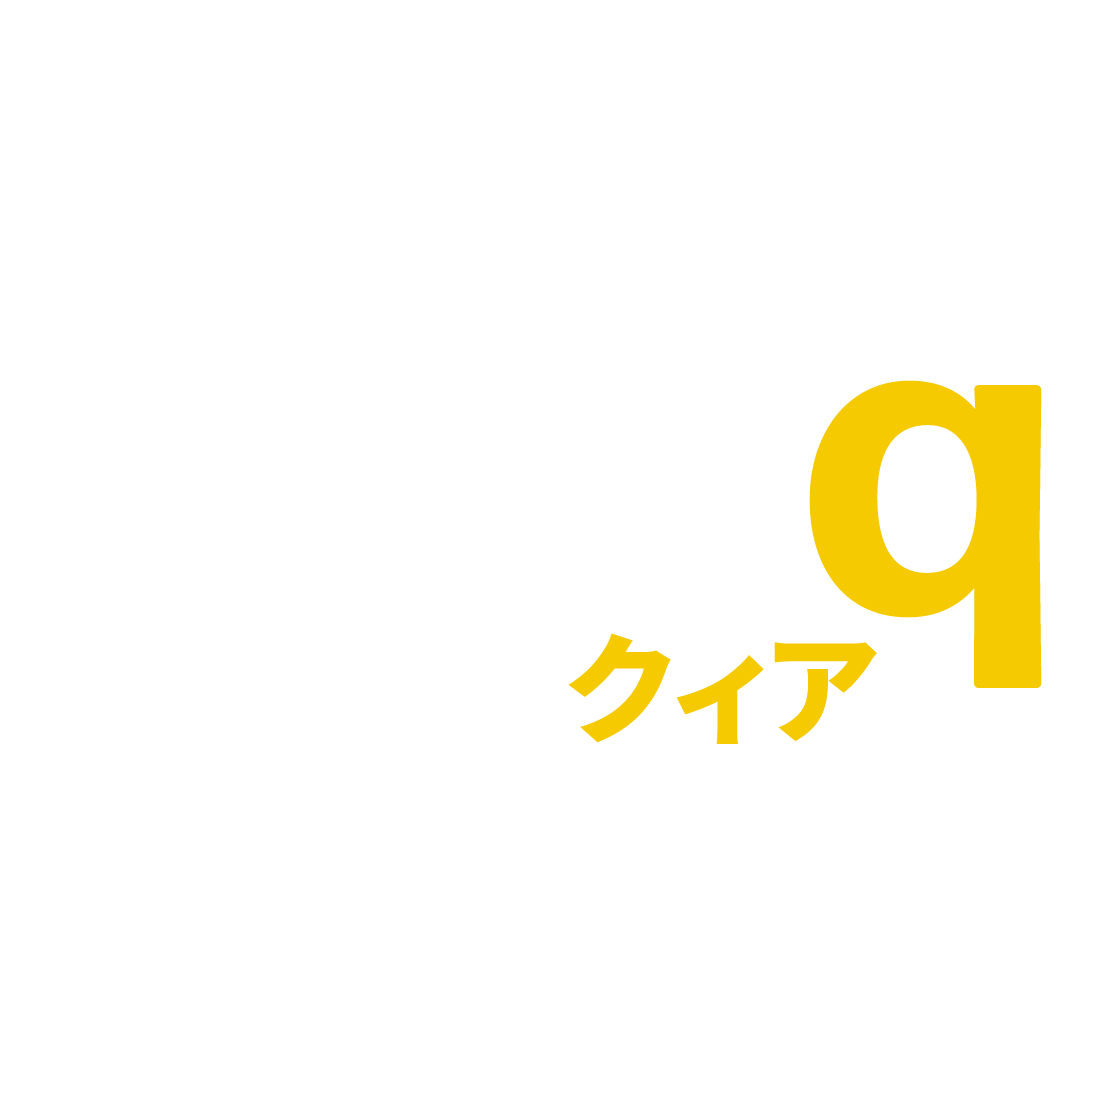 genq Studio